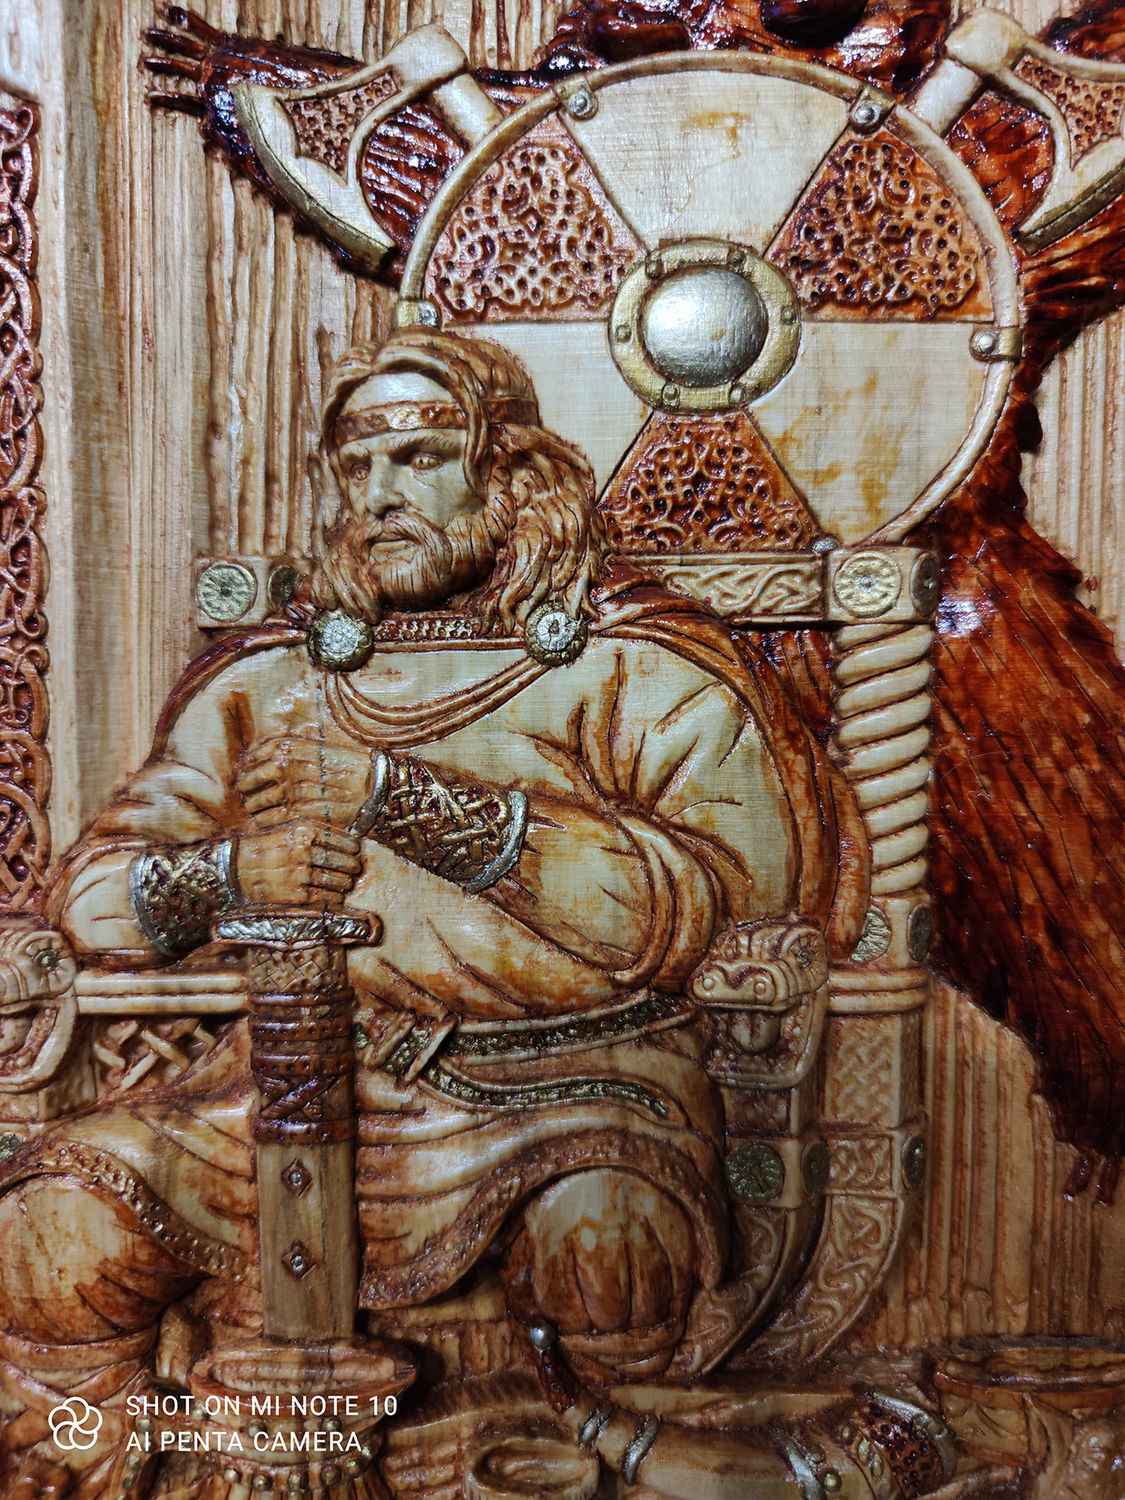  Jarl-the leader of the Vikings, Panels, Ivanovo,  Фото №1